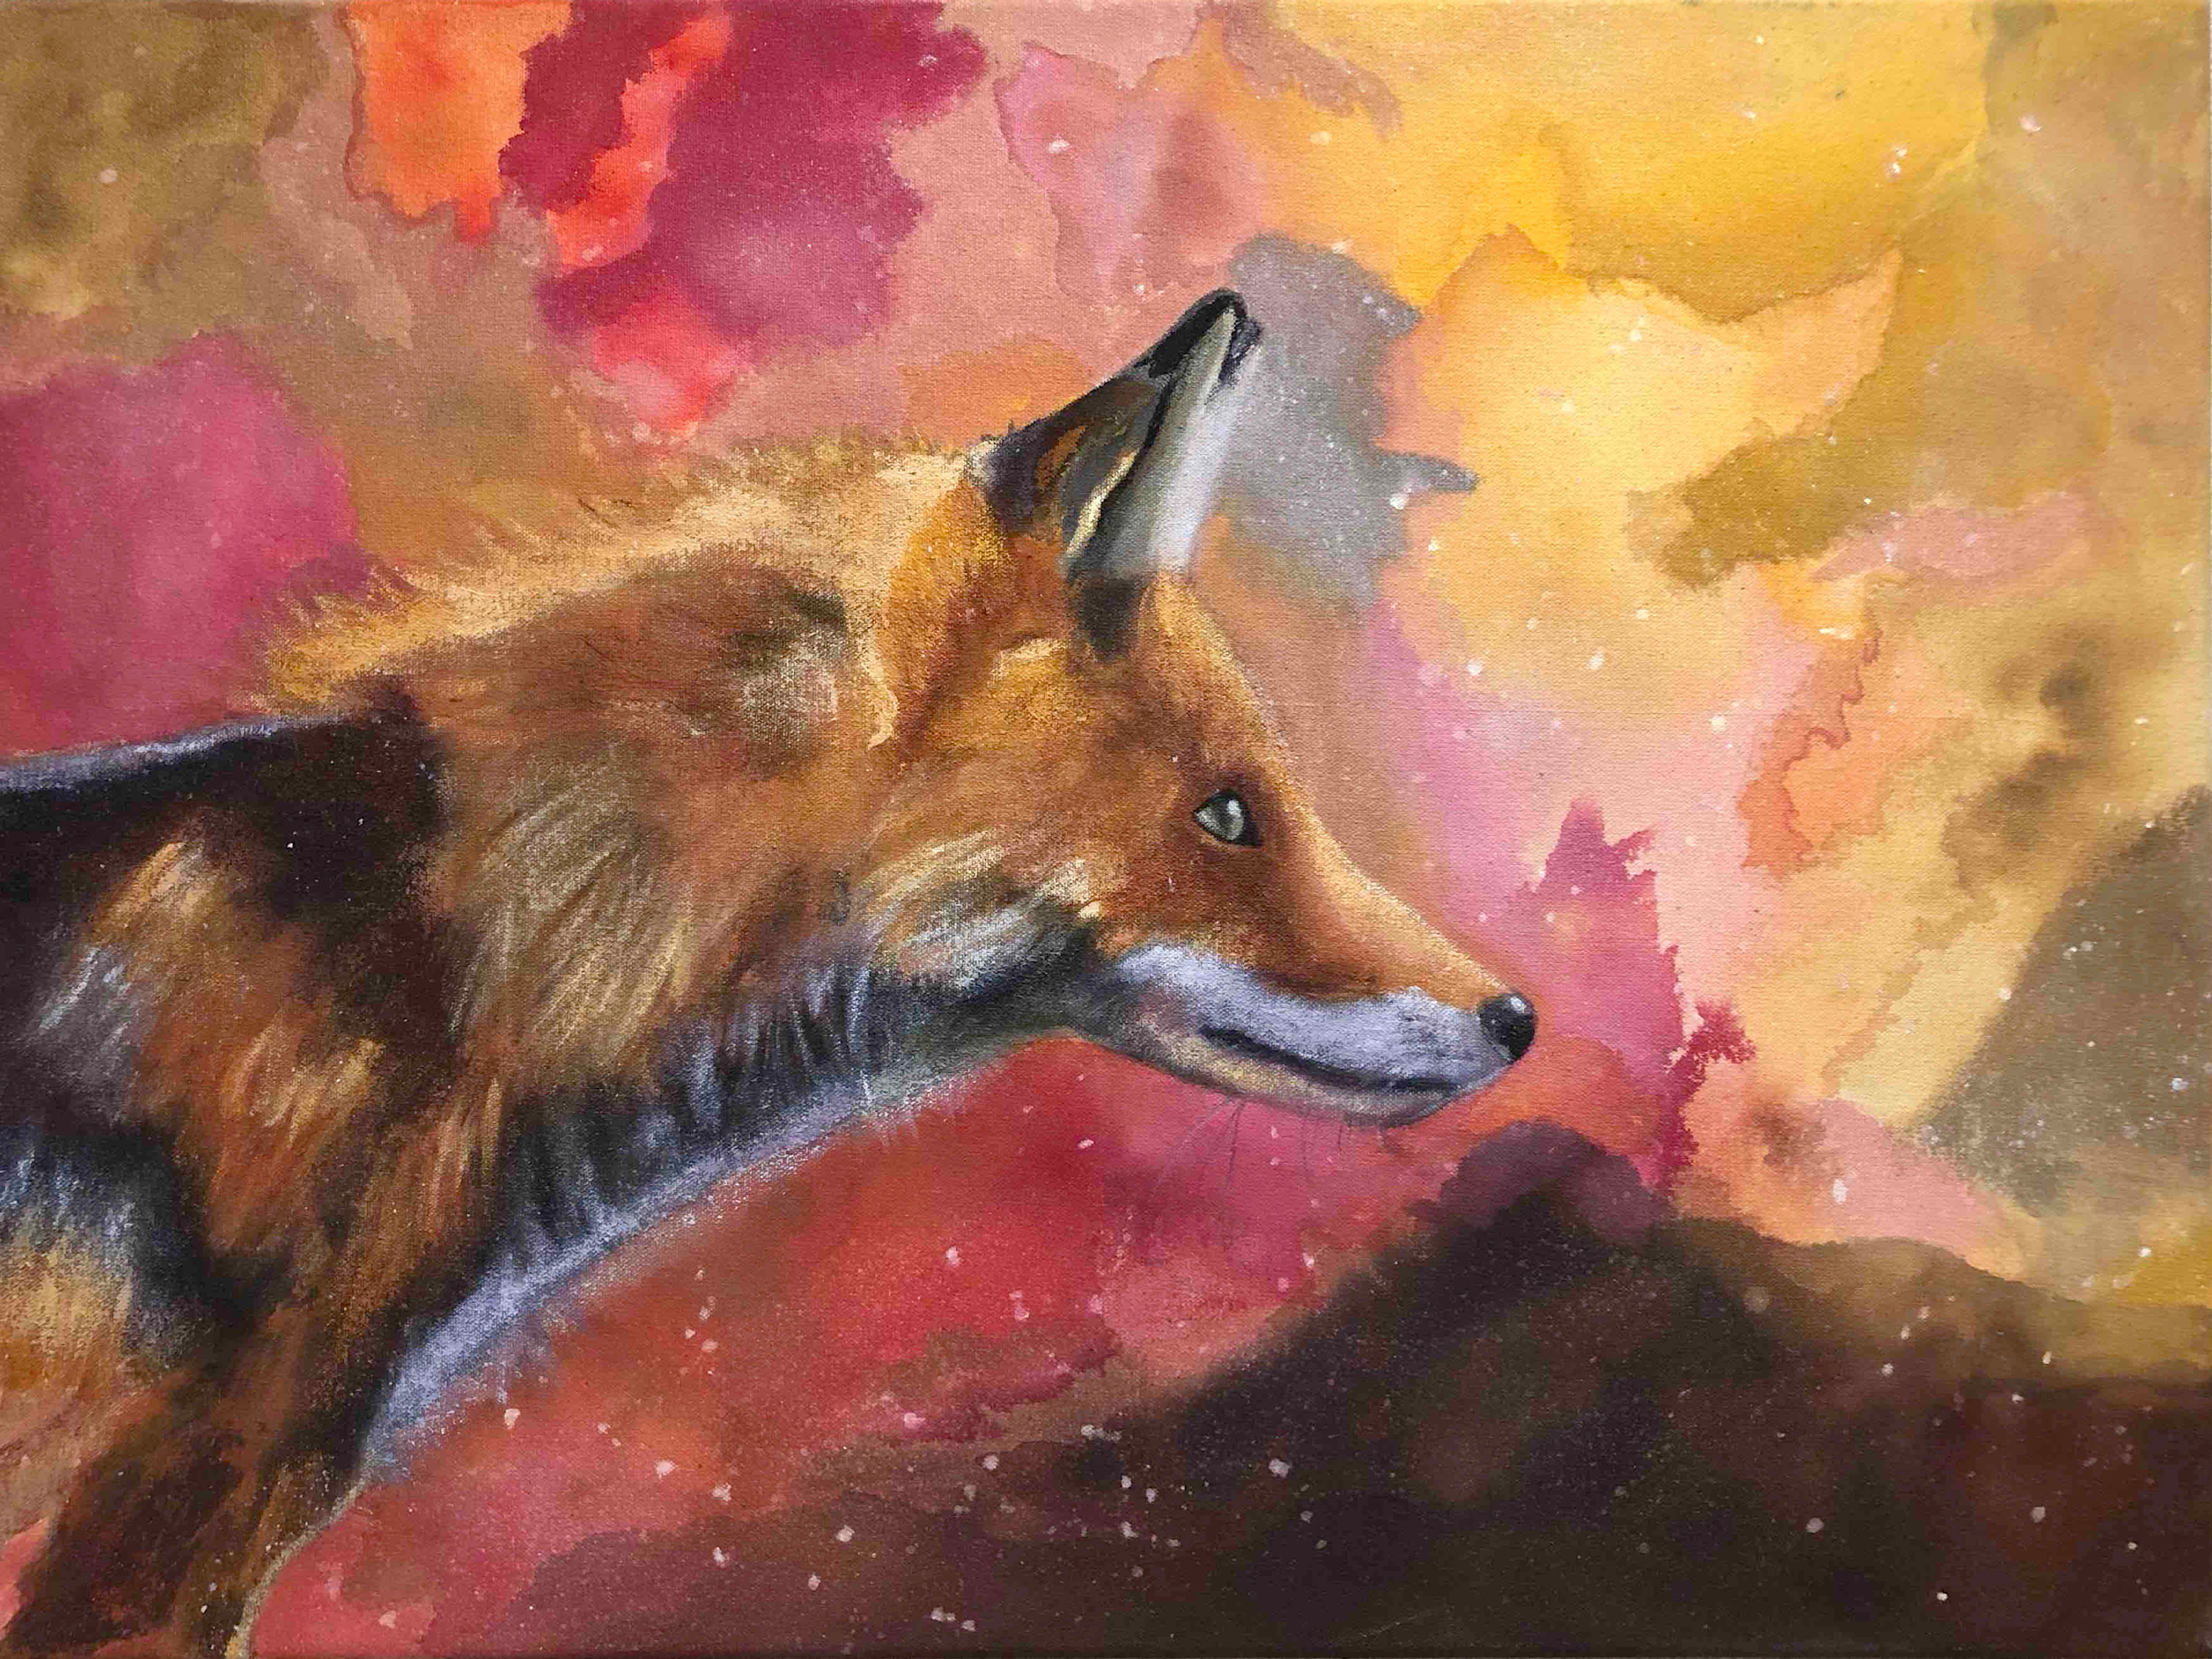 Red fox wild life gabriela ortiz 1 for original painting profile nhtxl8